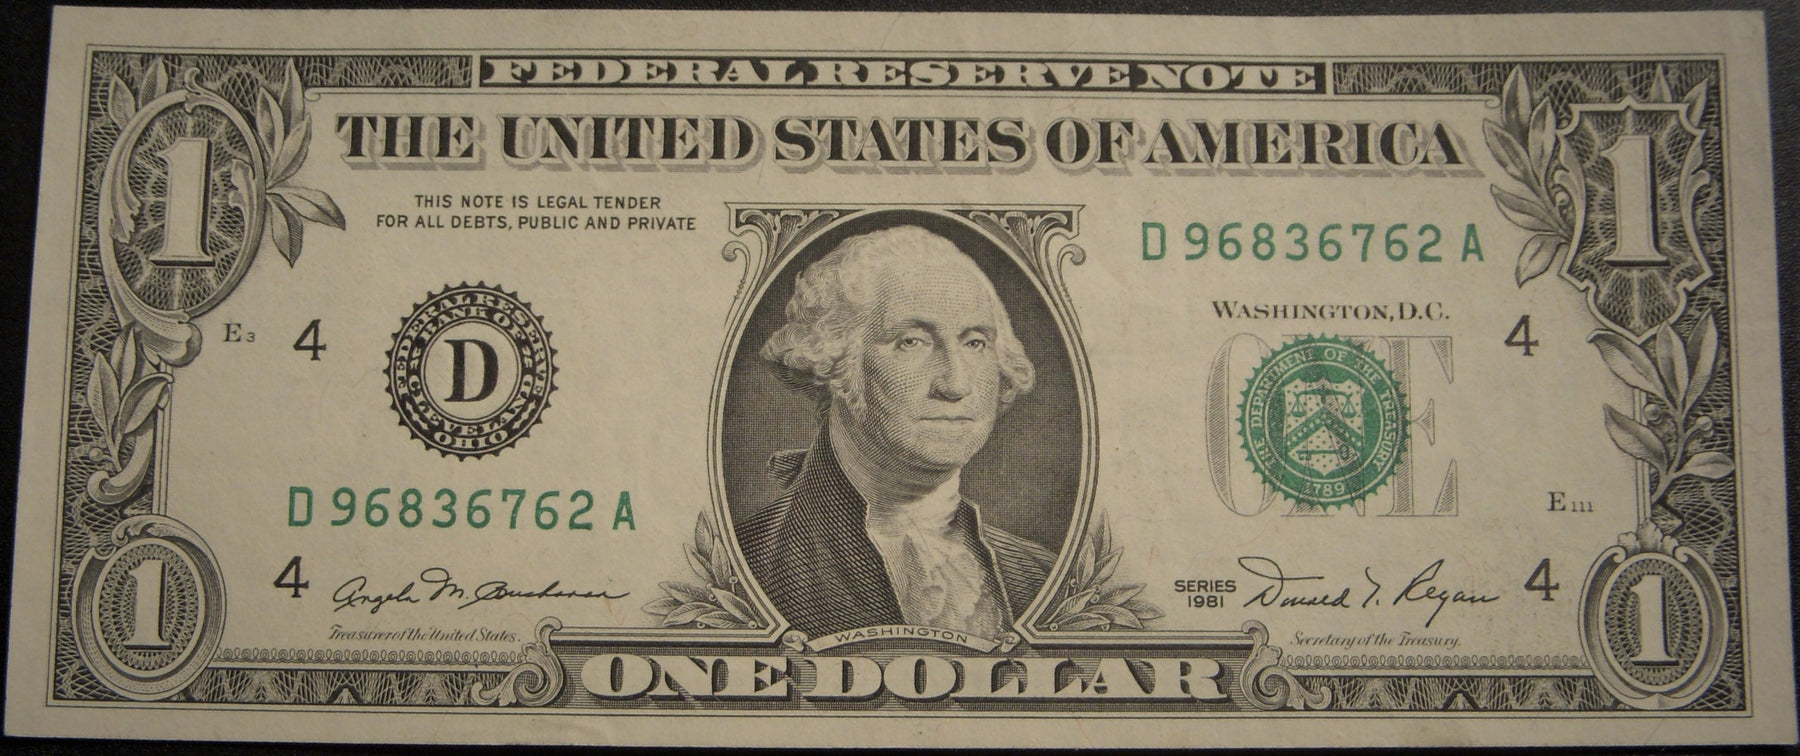 1981 (D) $1 Federal Reserve Note - FR#1911D